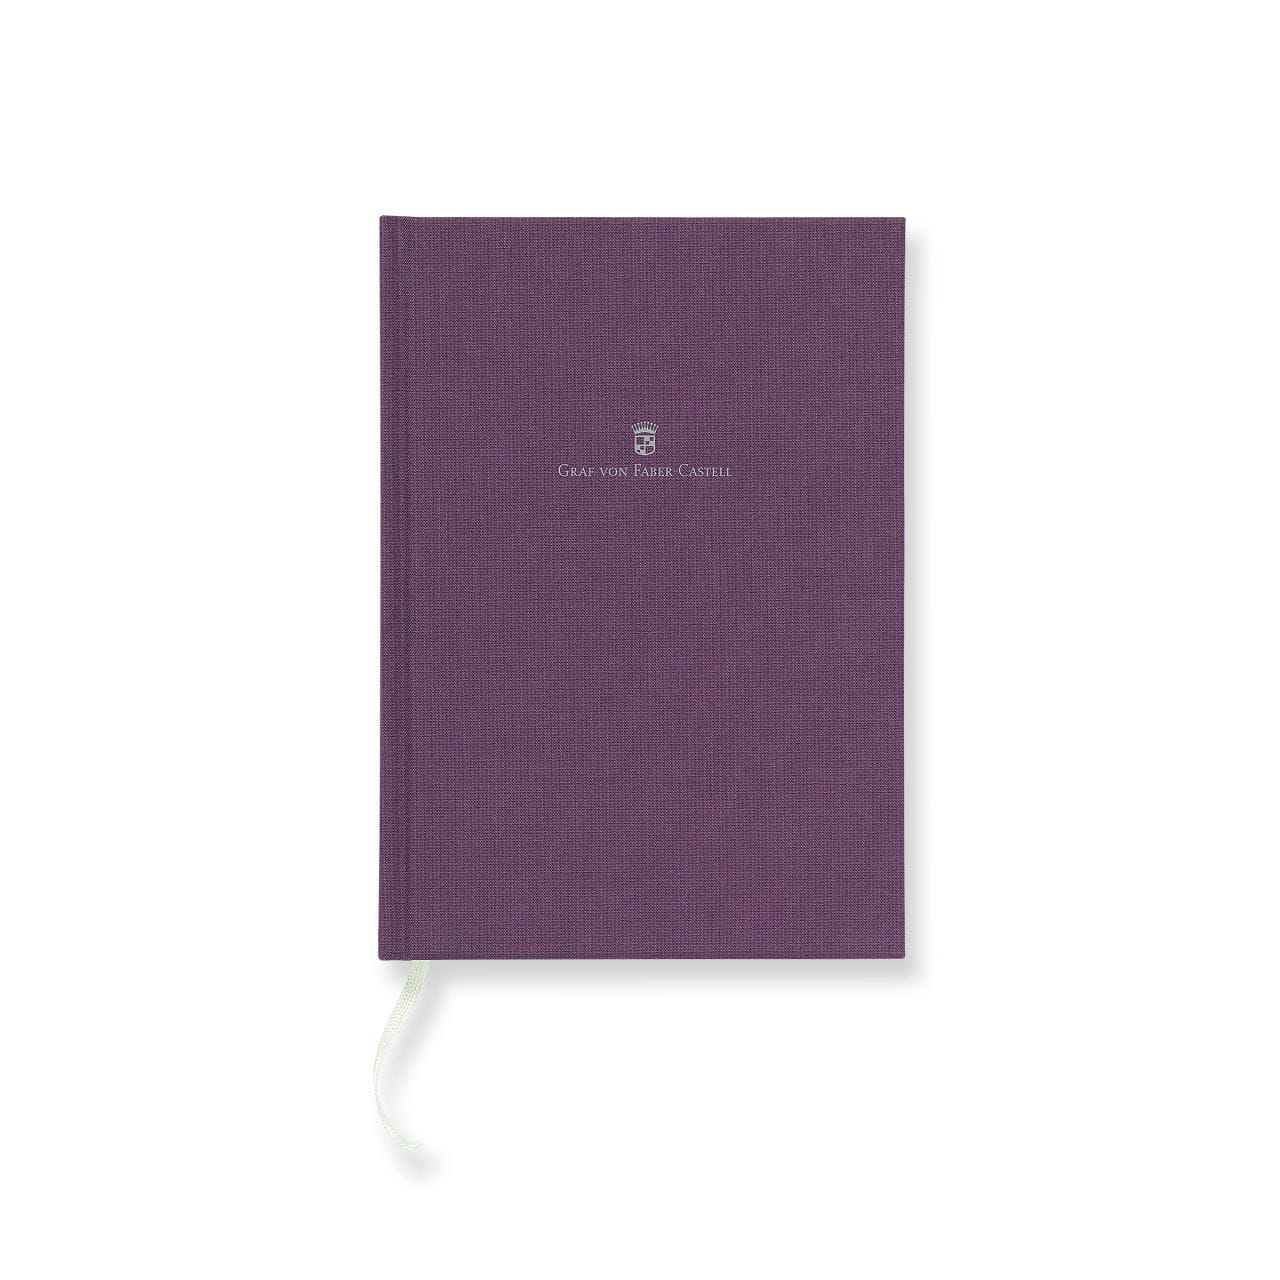 Graf-von-Faber-Castell - Cuaderno con tapa de lino DIN A5 violeta